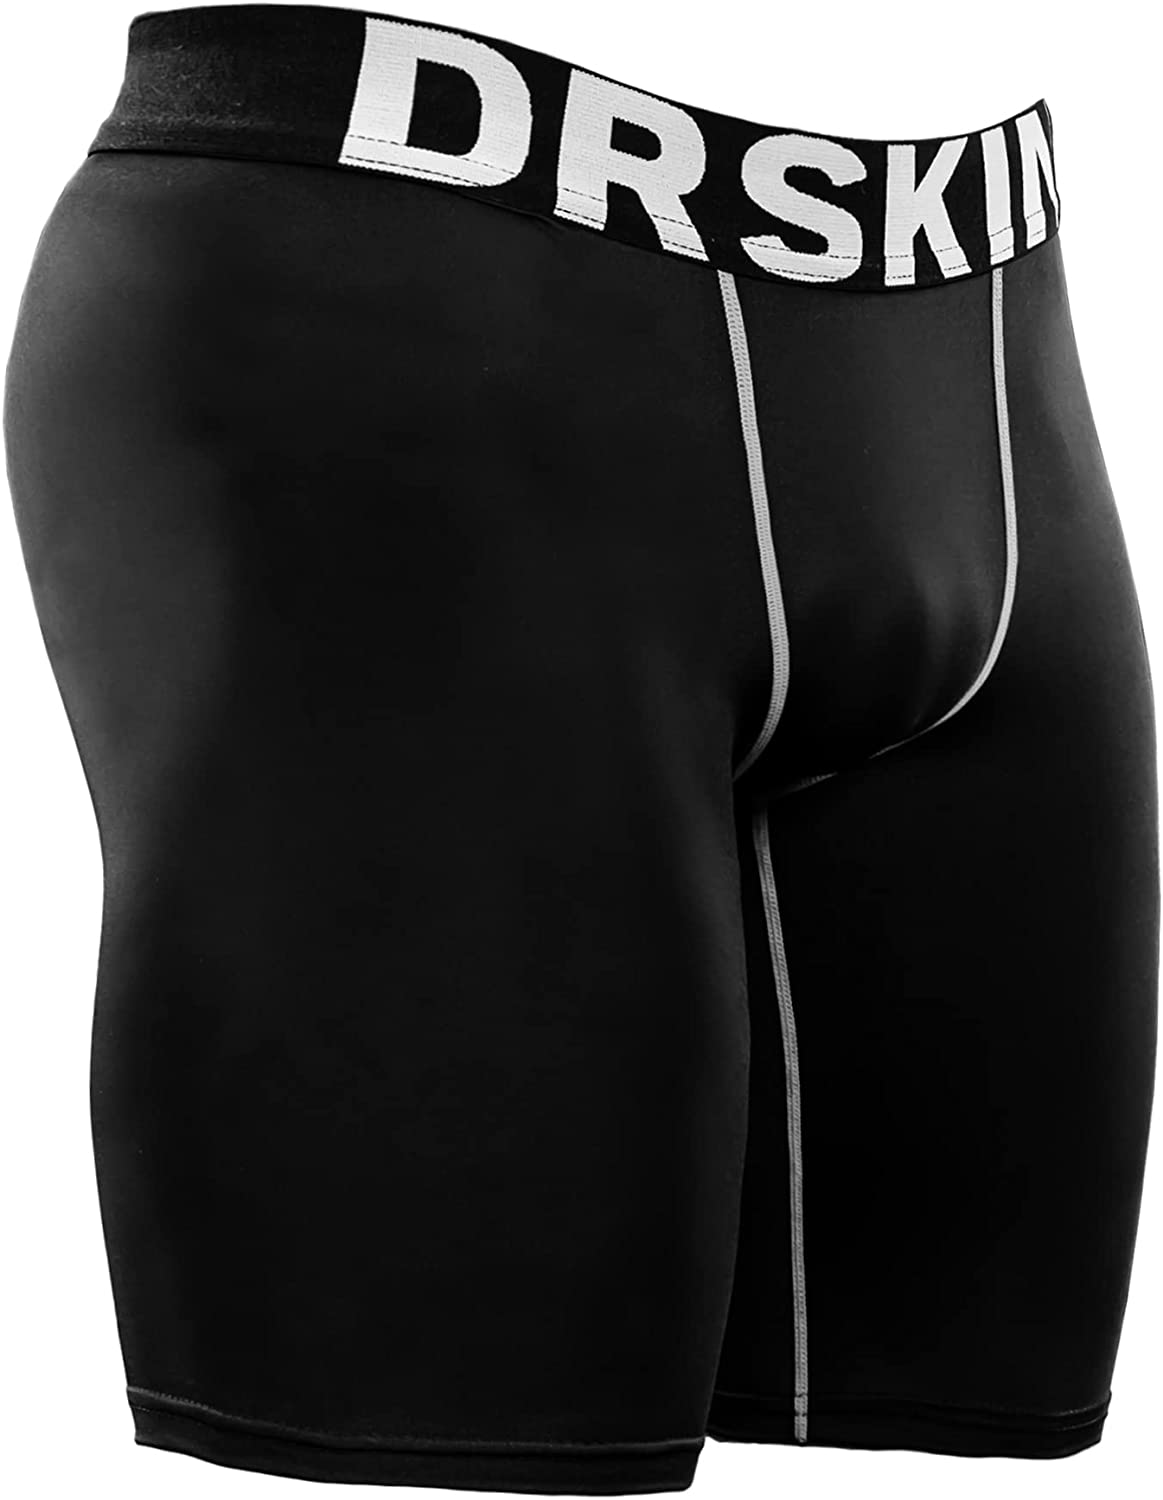 DRSKIN Men's 6 4 3 or 1 Pack Compression Shorts Pants Sports